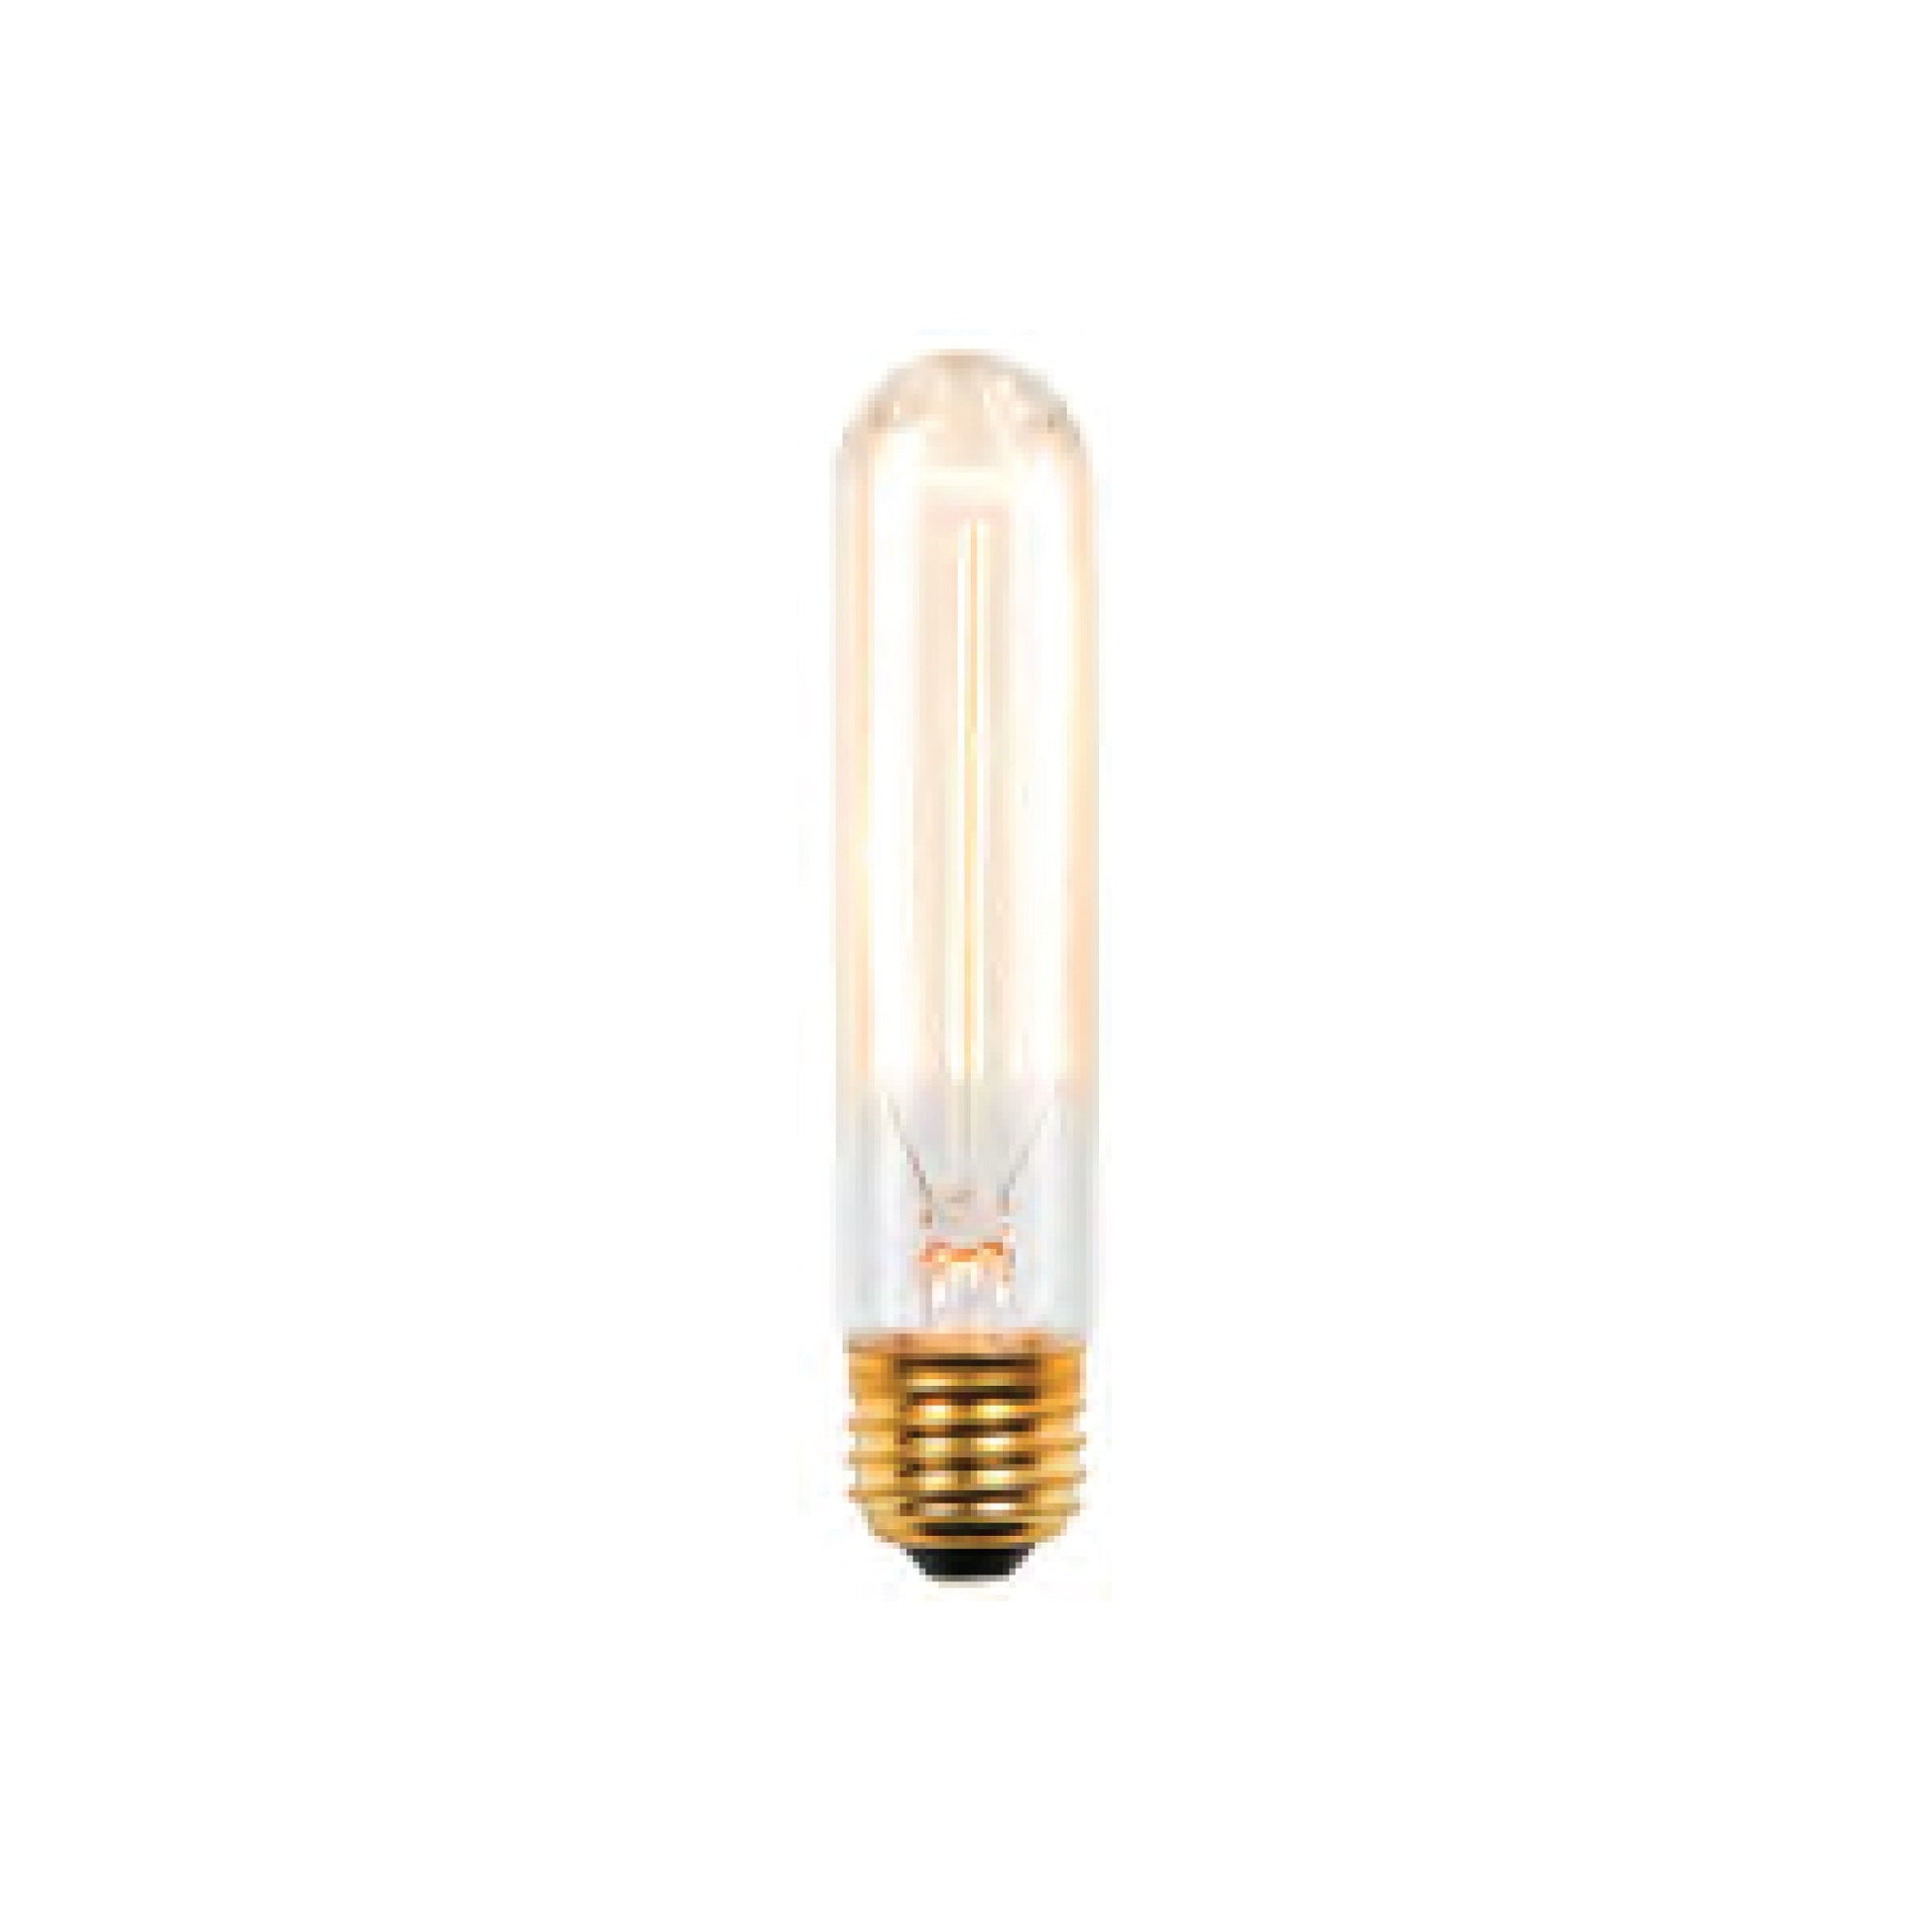 Craftmade 60-Watt T9 Clear Amber Finish, E26 Medium Base, 5.5" M.O.L., 2200K Warm White Incandescent Light Bulb